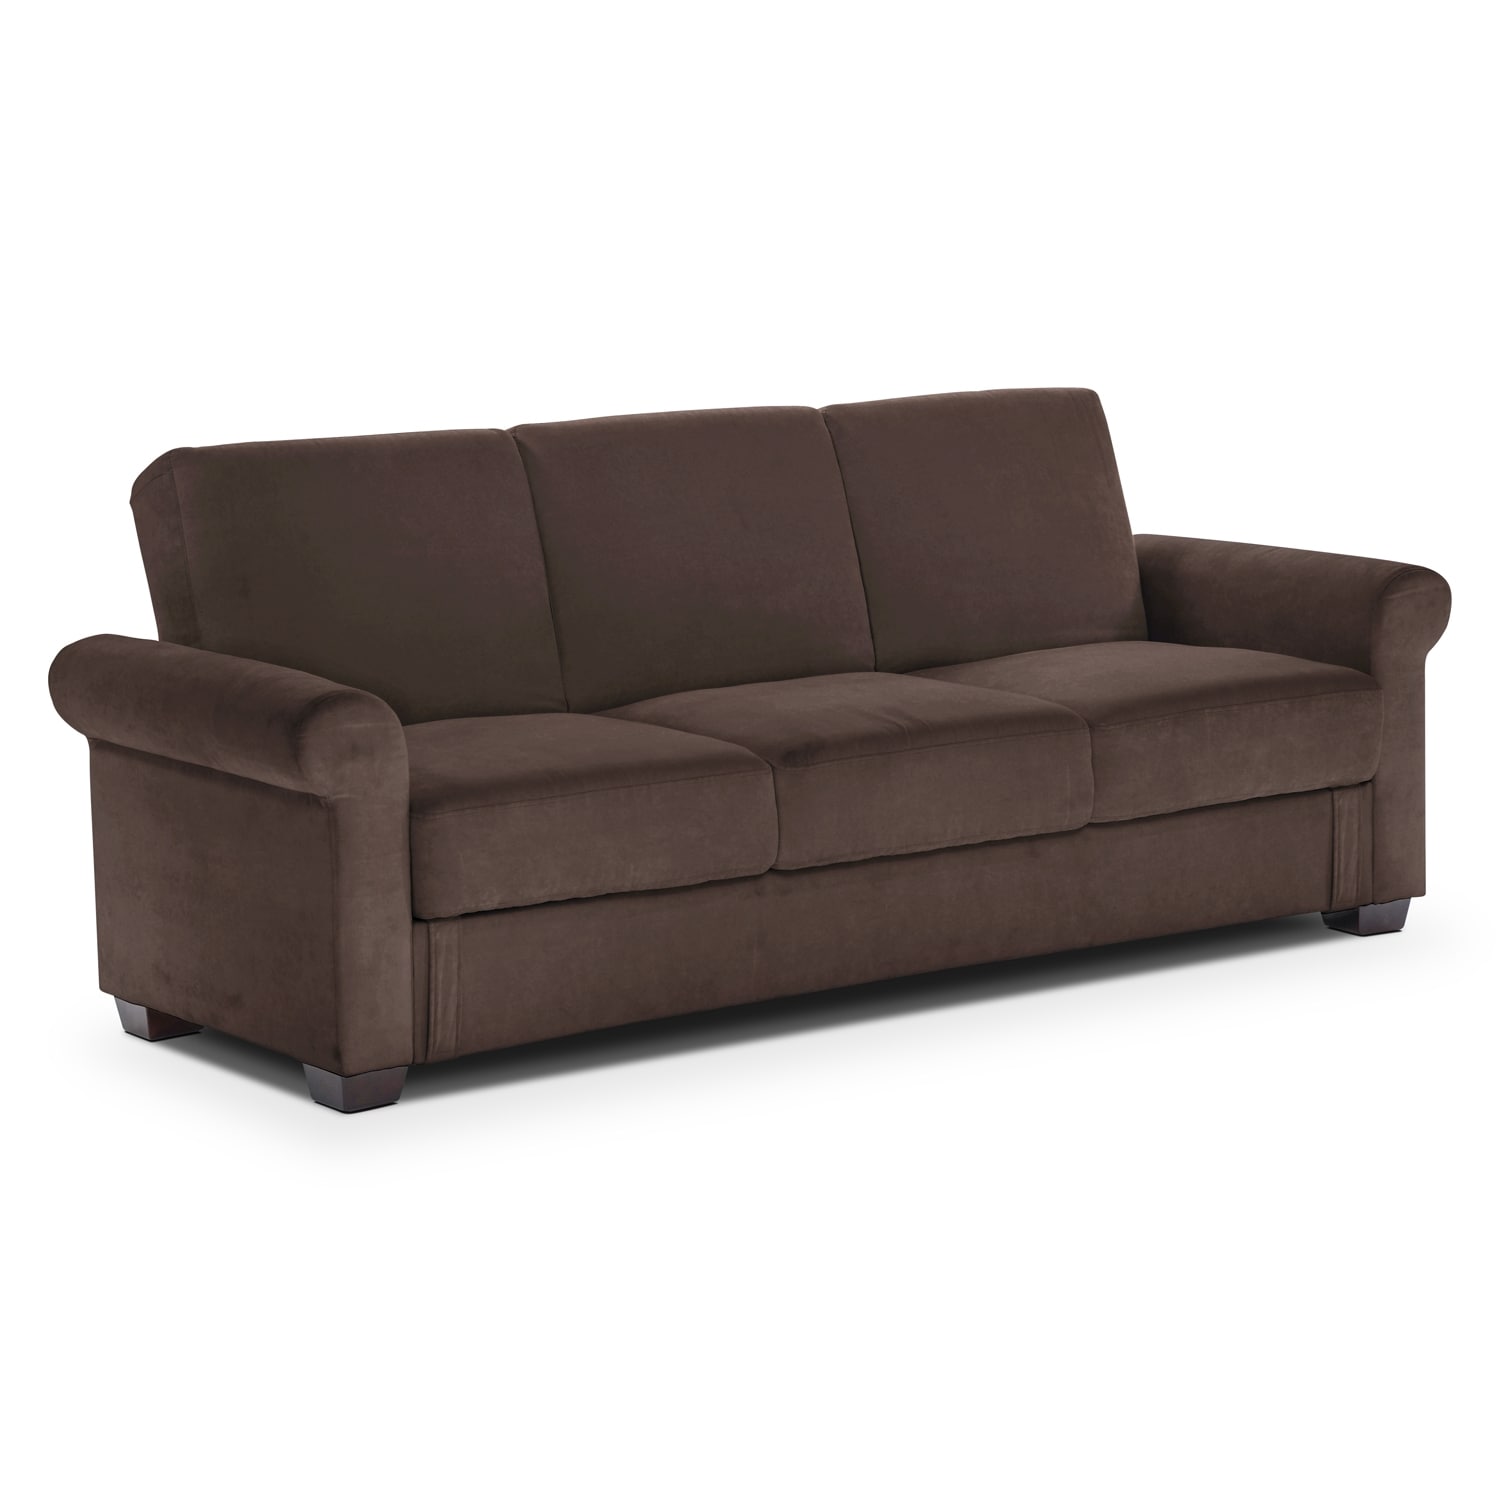 Thomas Futon Sofa Bed with Storage | Value City Furniture